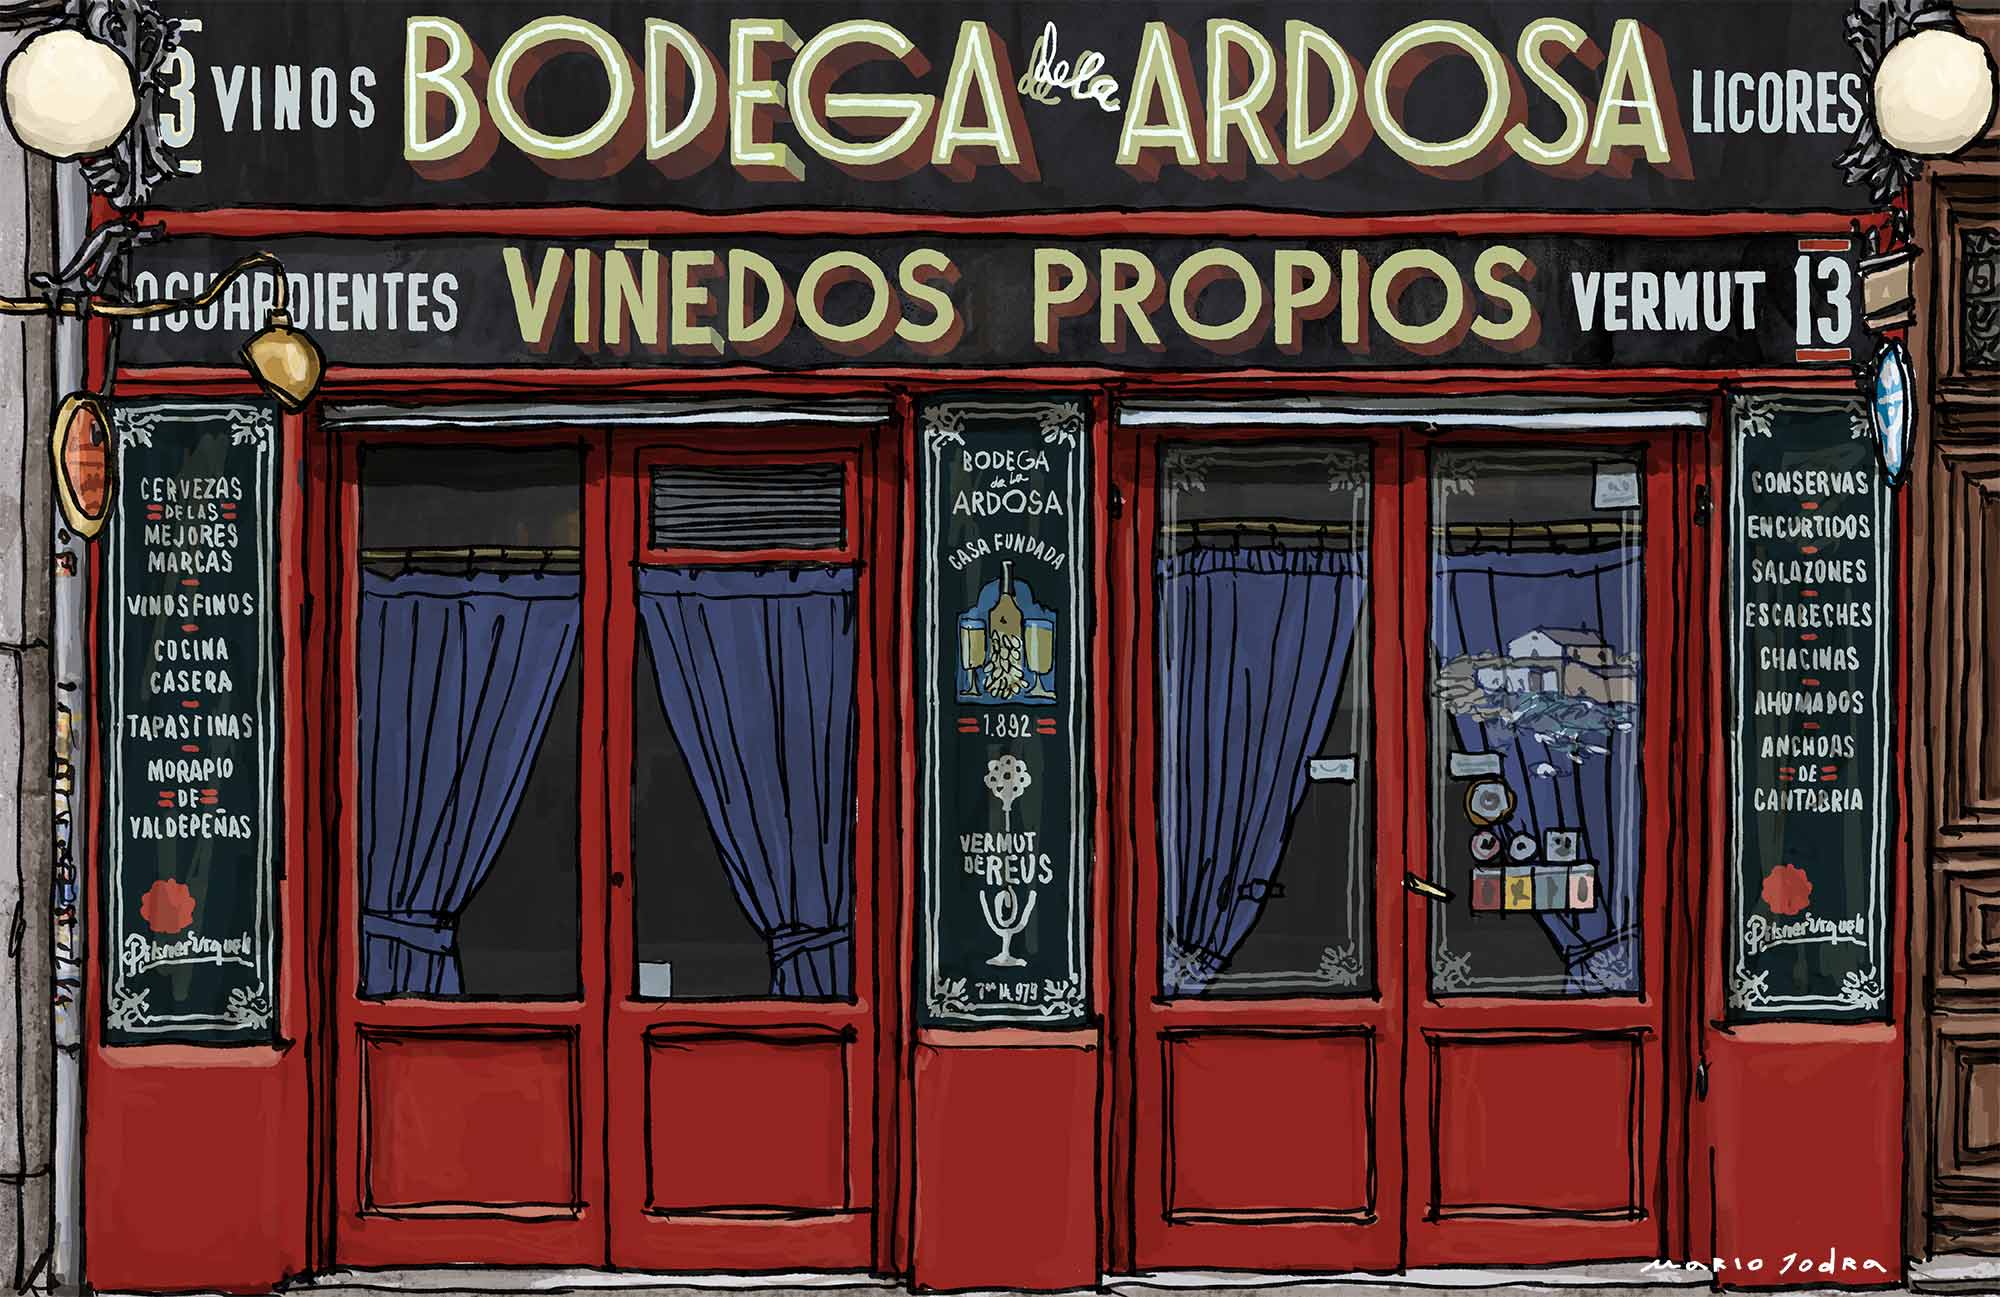 Mario Jodra illustration Art - Bodega de la Ardosa. Madrid tavern. Since 1892